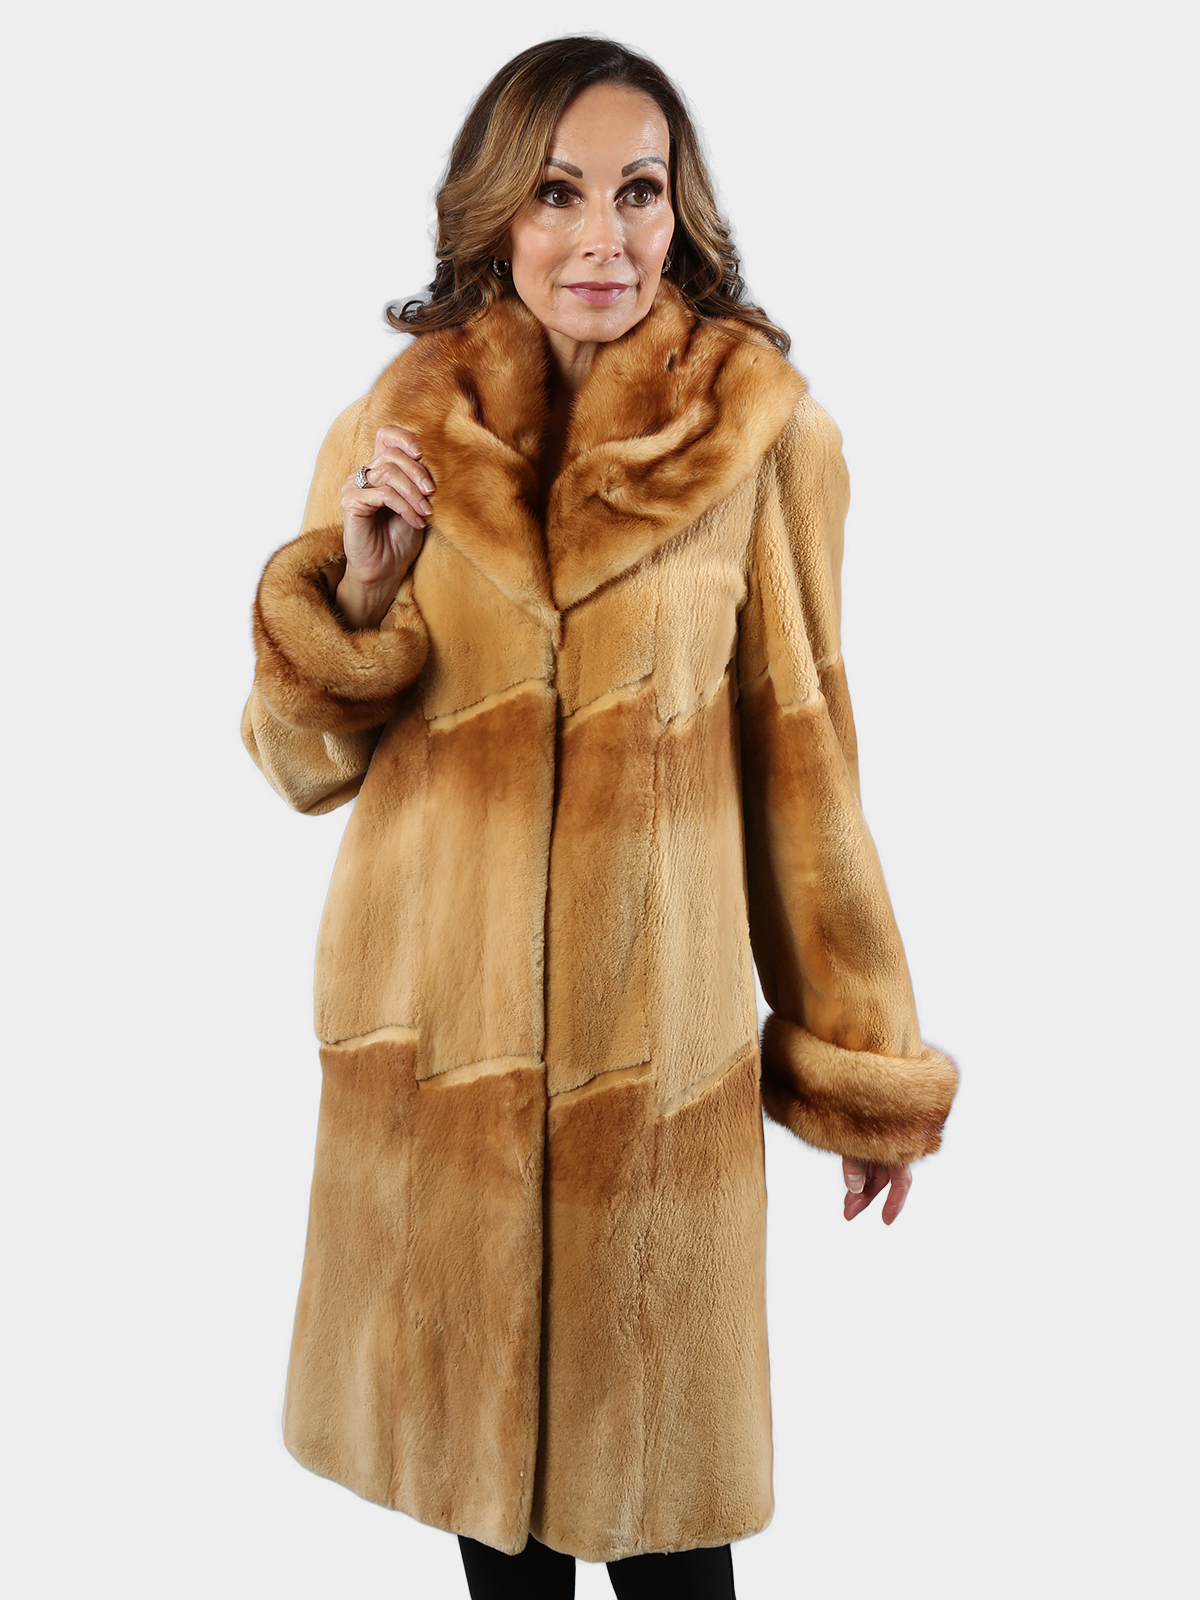 Day Furs Inc. Woman's Two Tone Sheared Mink Fur Jacket